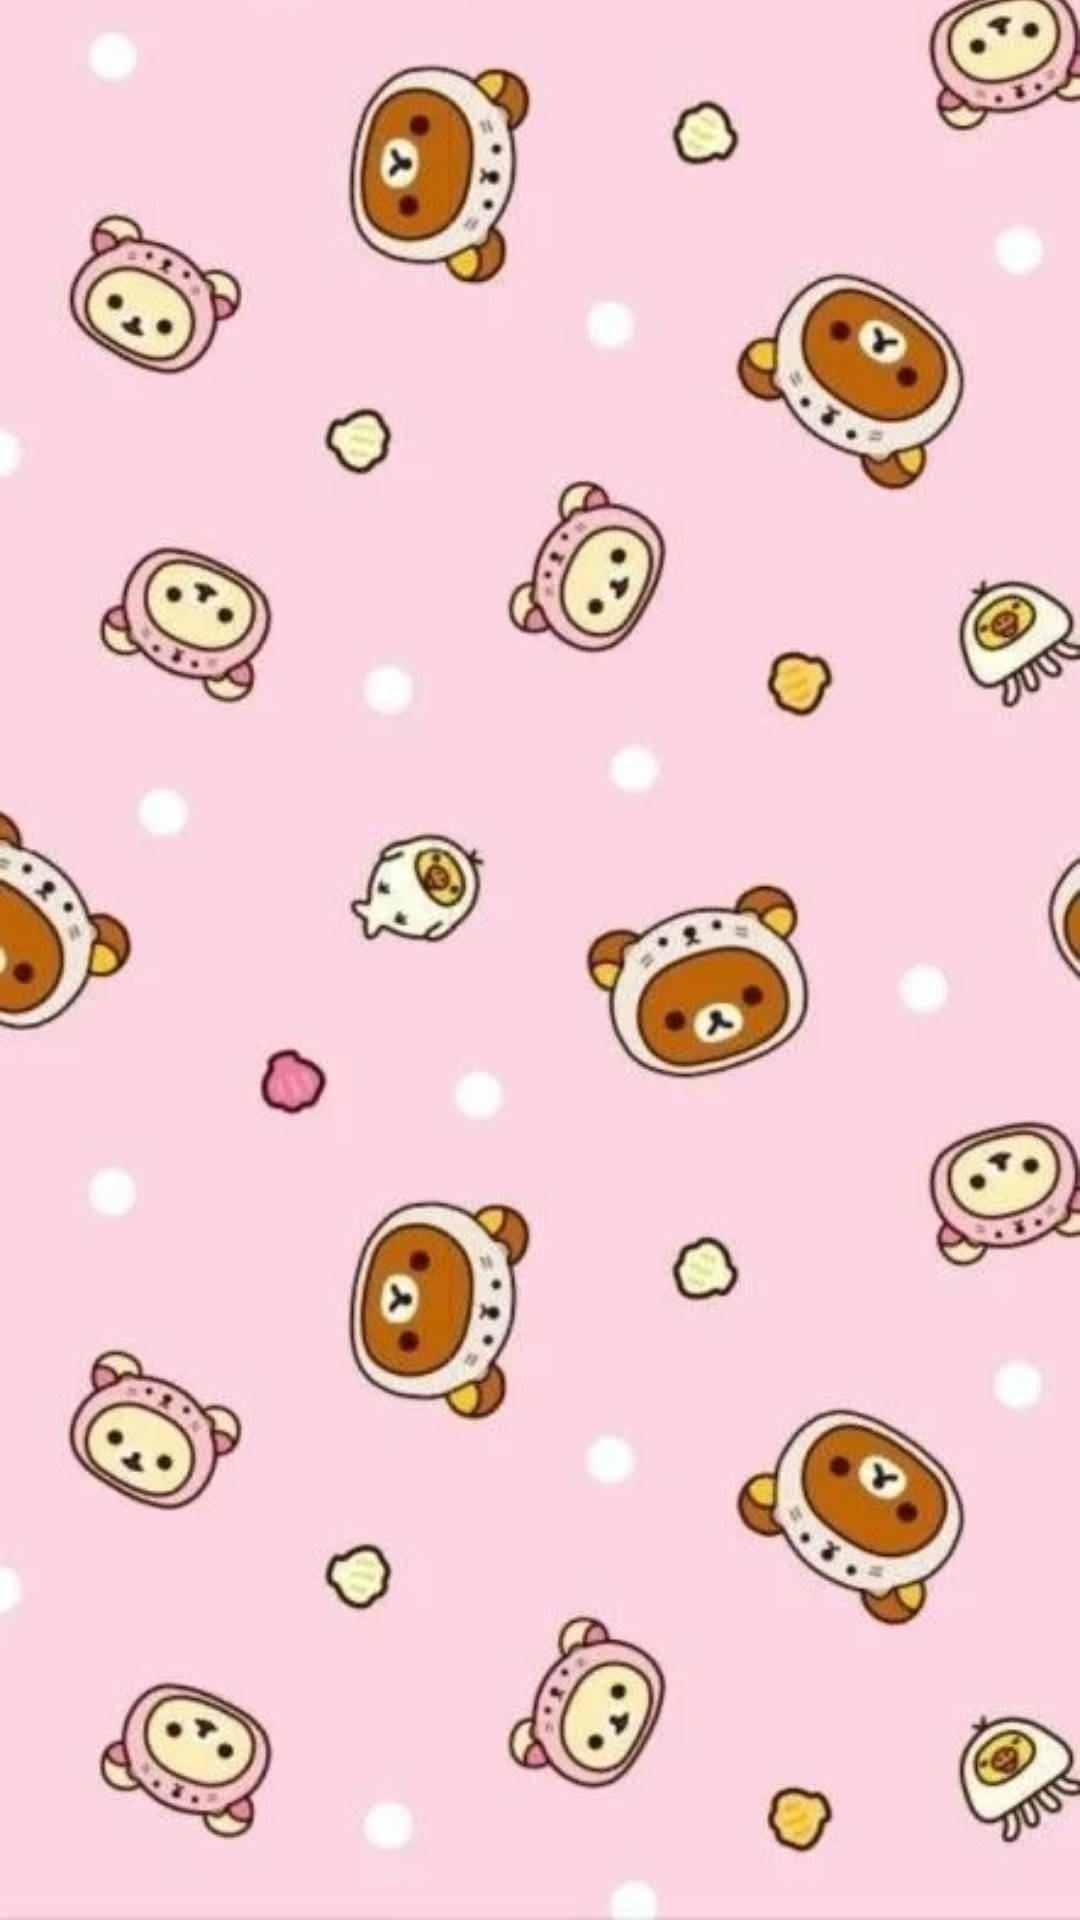 Enjoy the sweet world of Cute Sanrio! Wallpaper